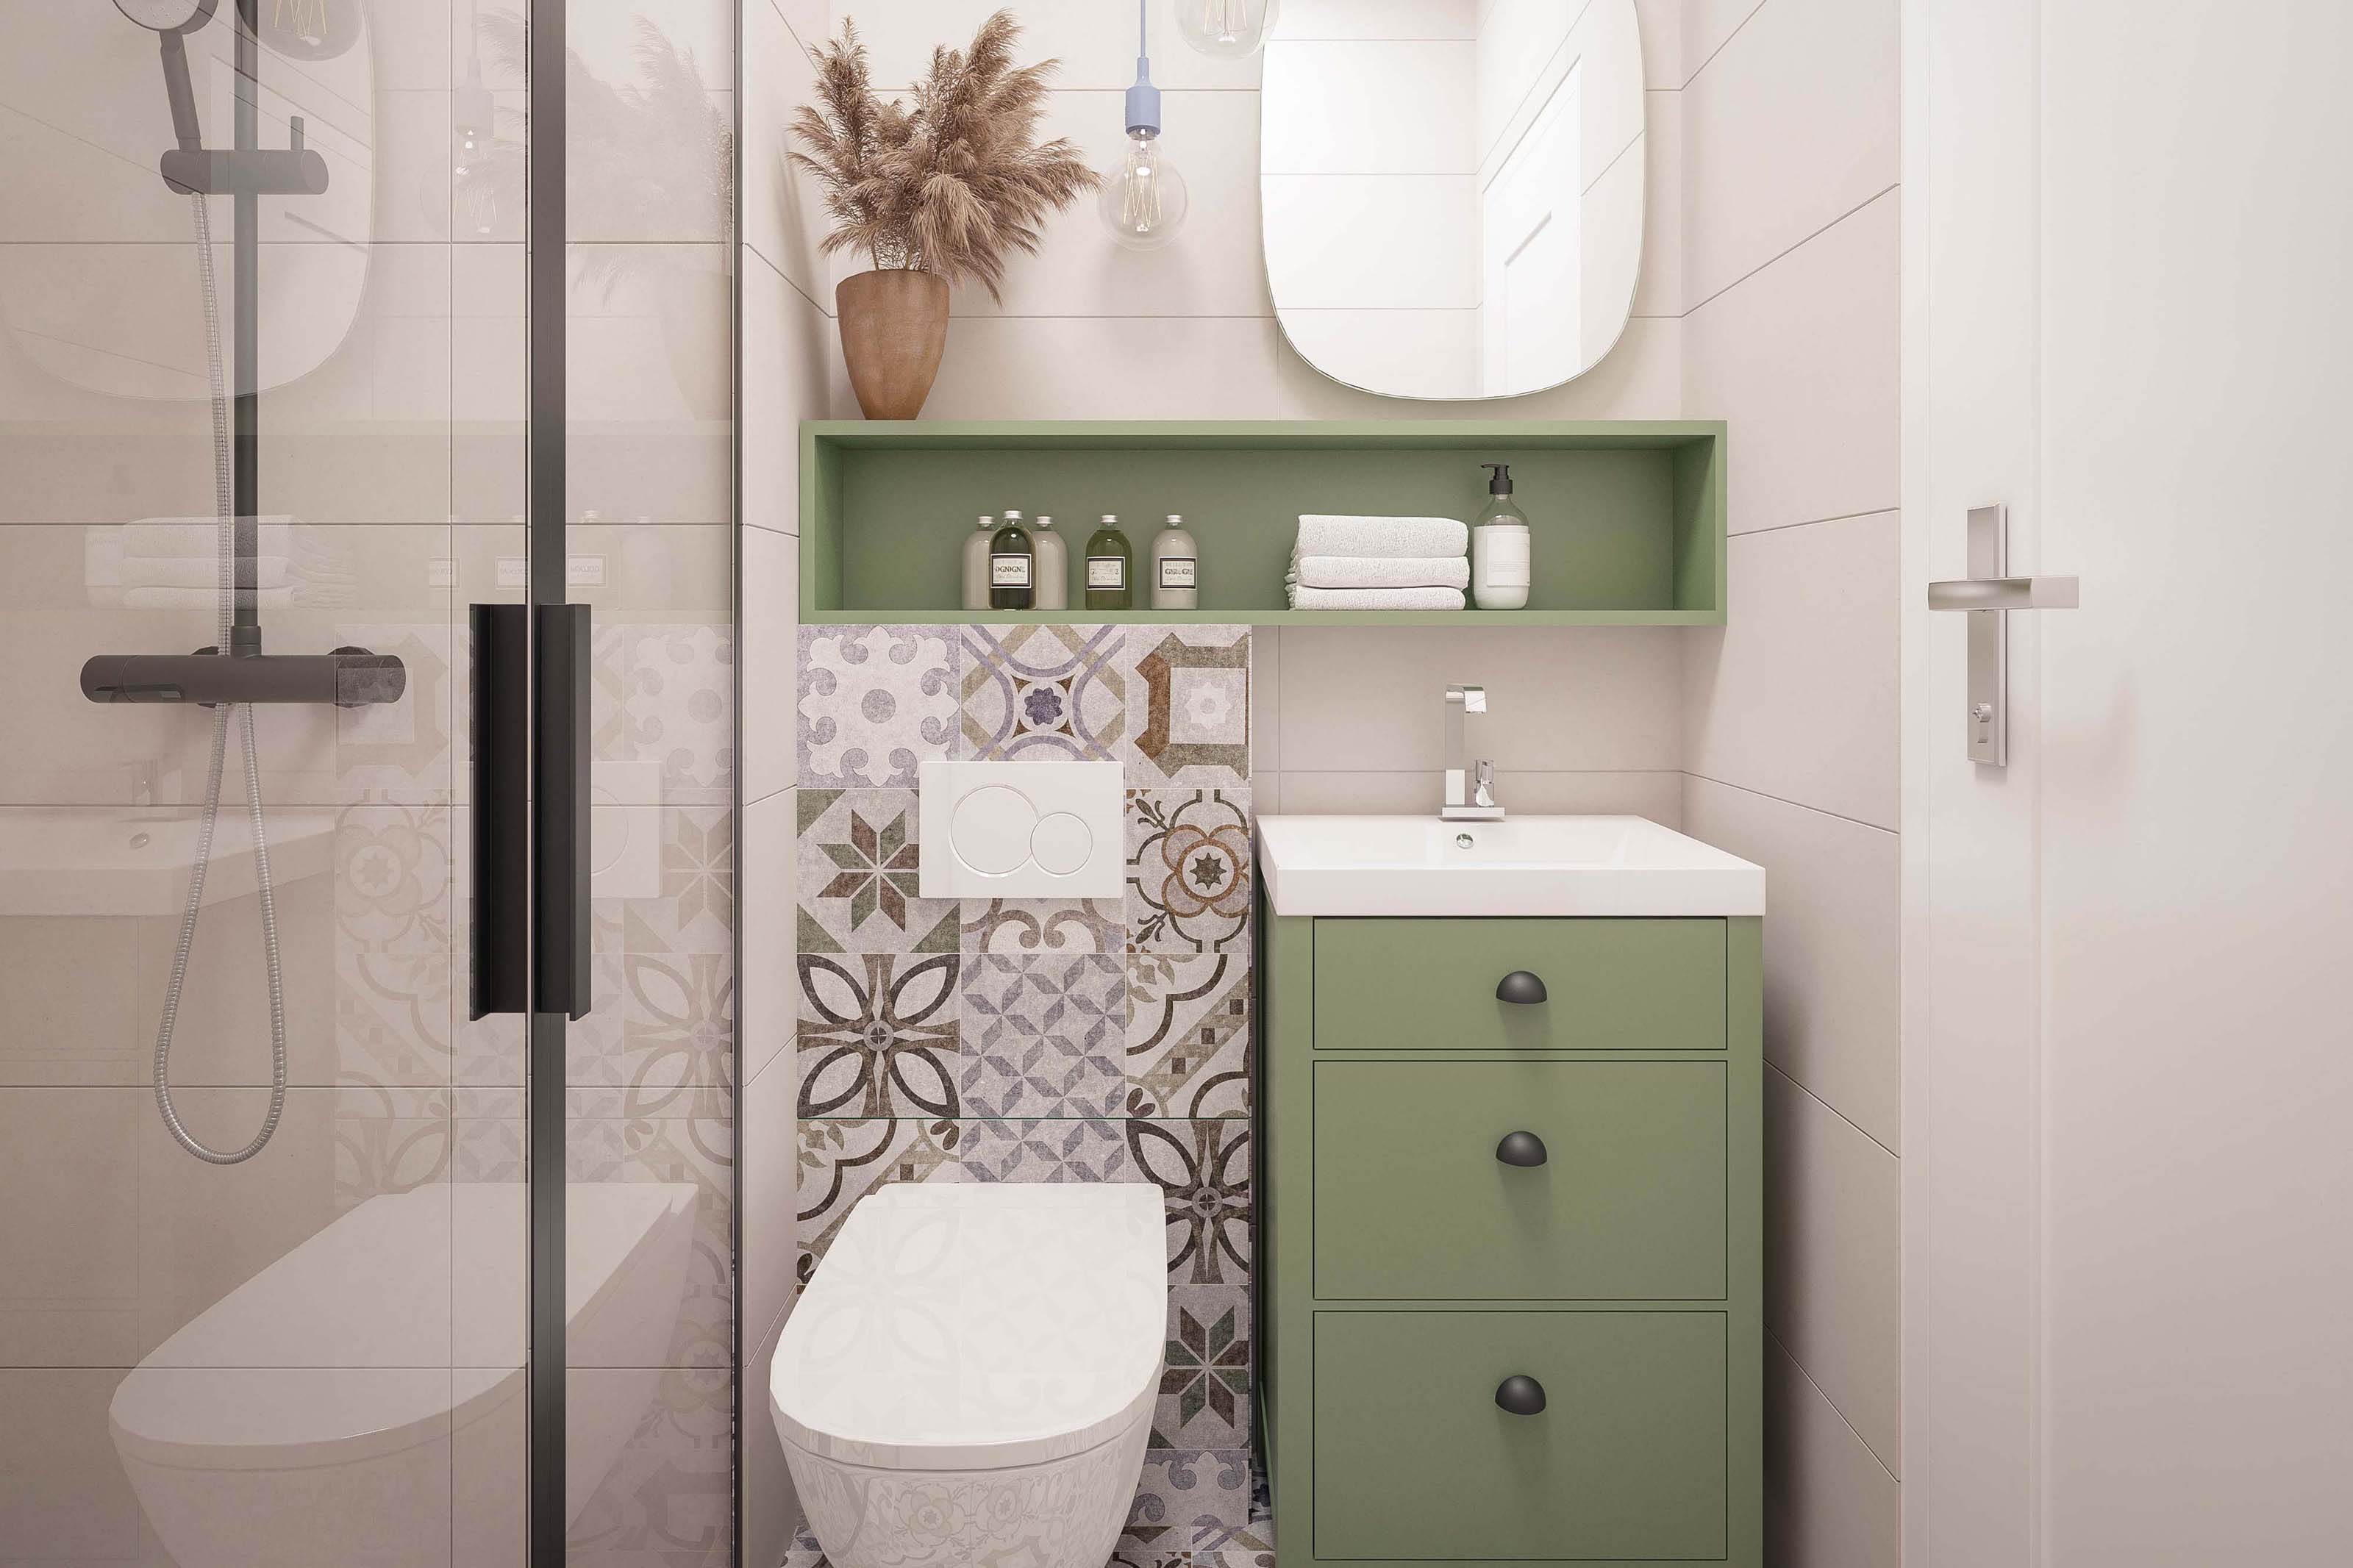 https://www.houselogic.com/wp-content/uploads/2022/04/small-bathroom-storage-ideas-green-shelf-vanity.jpg